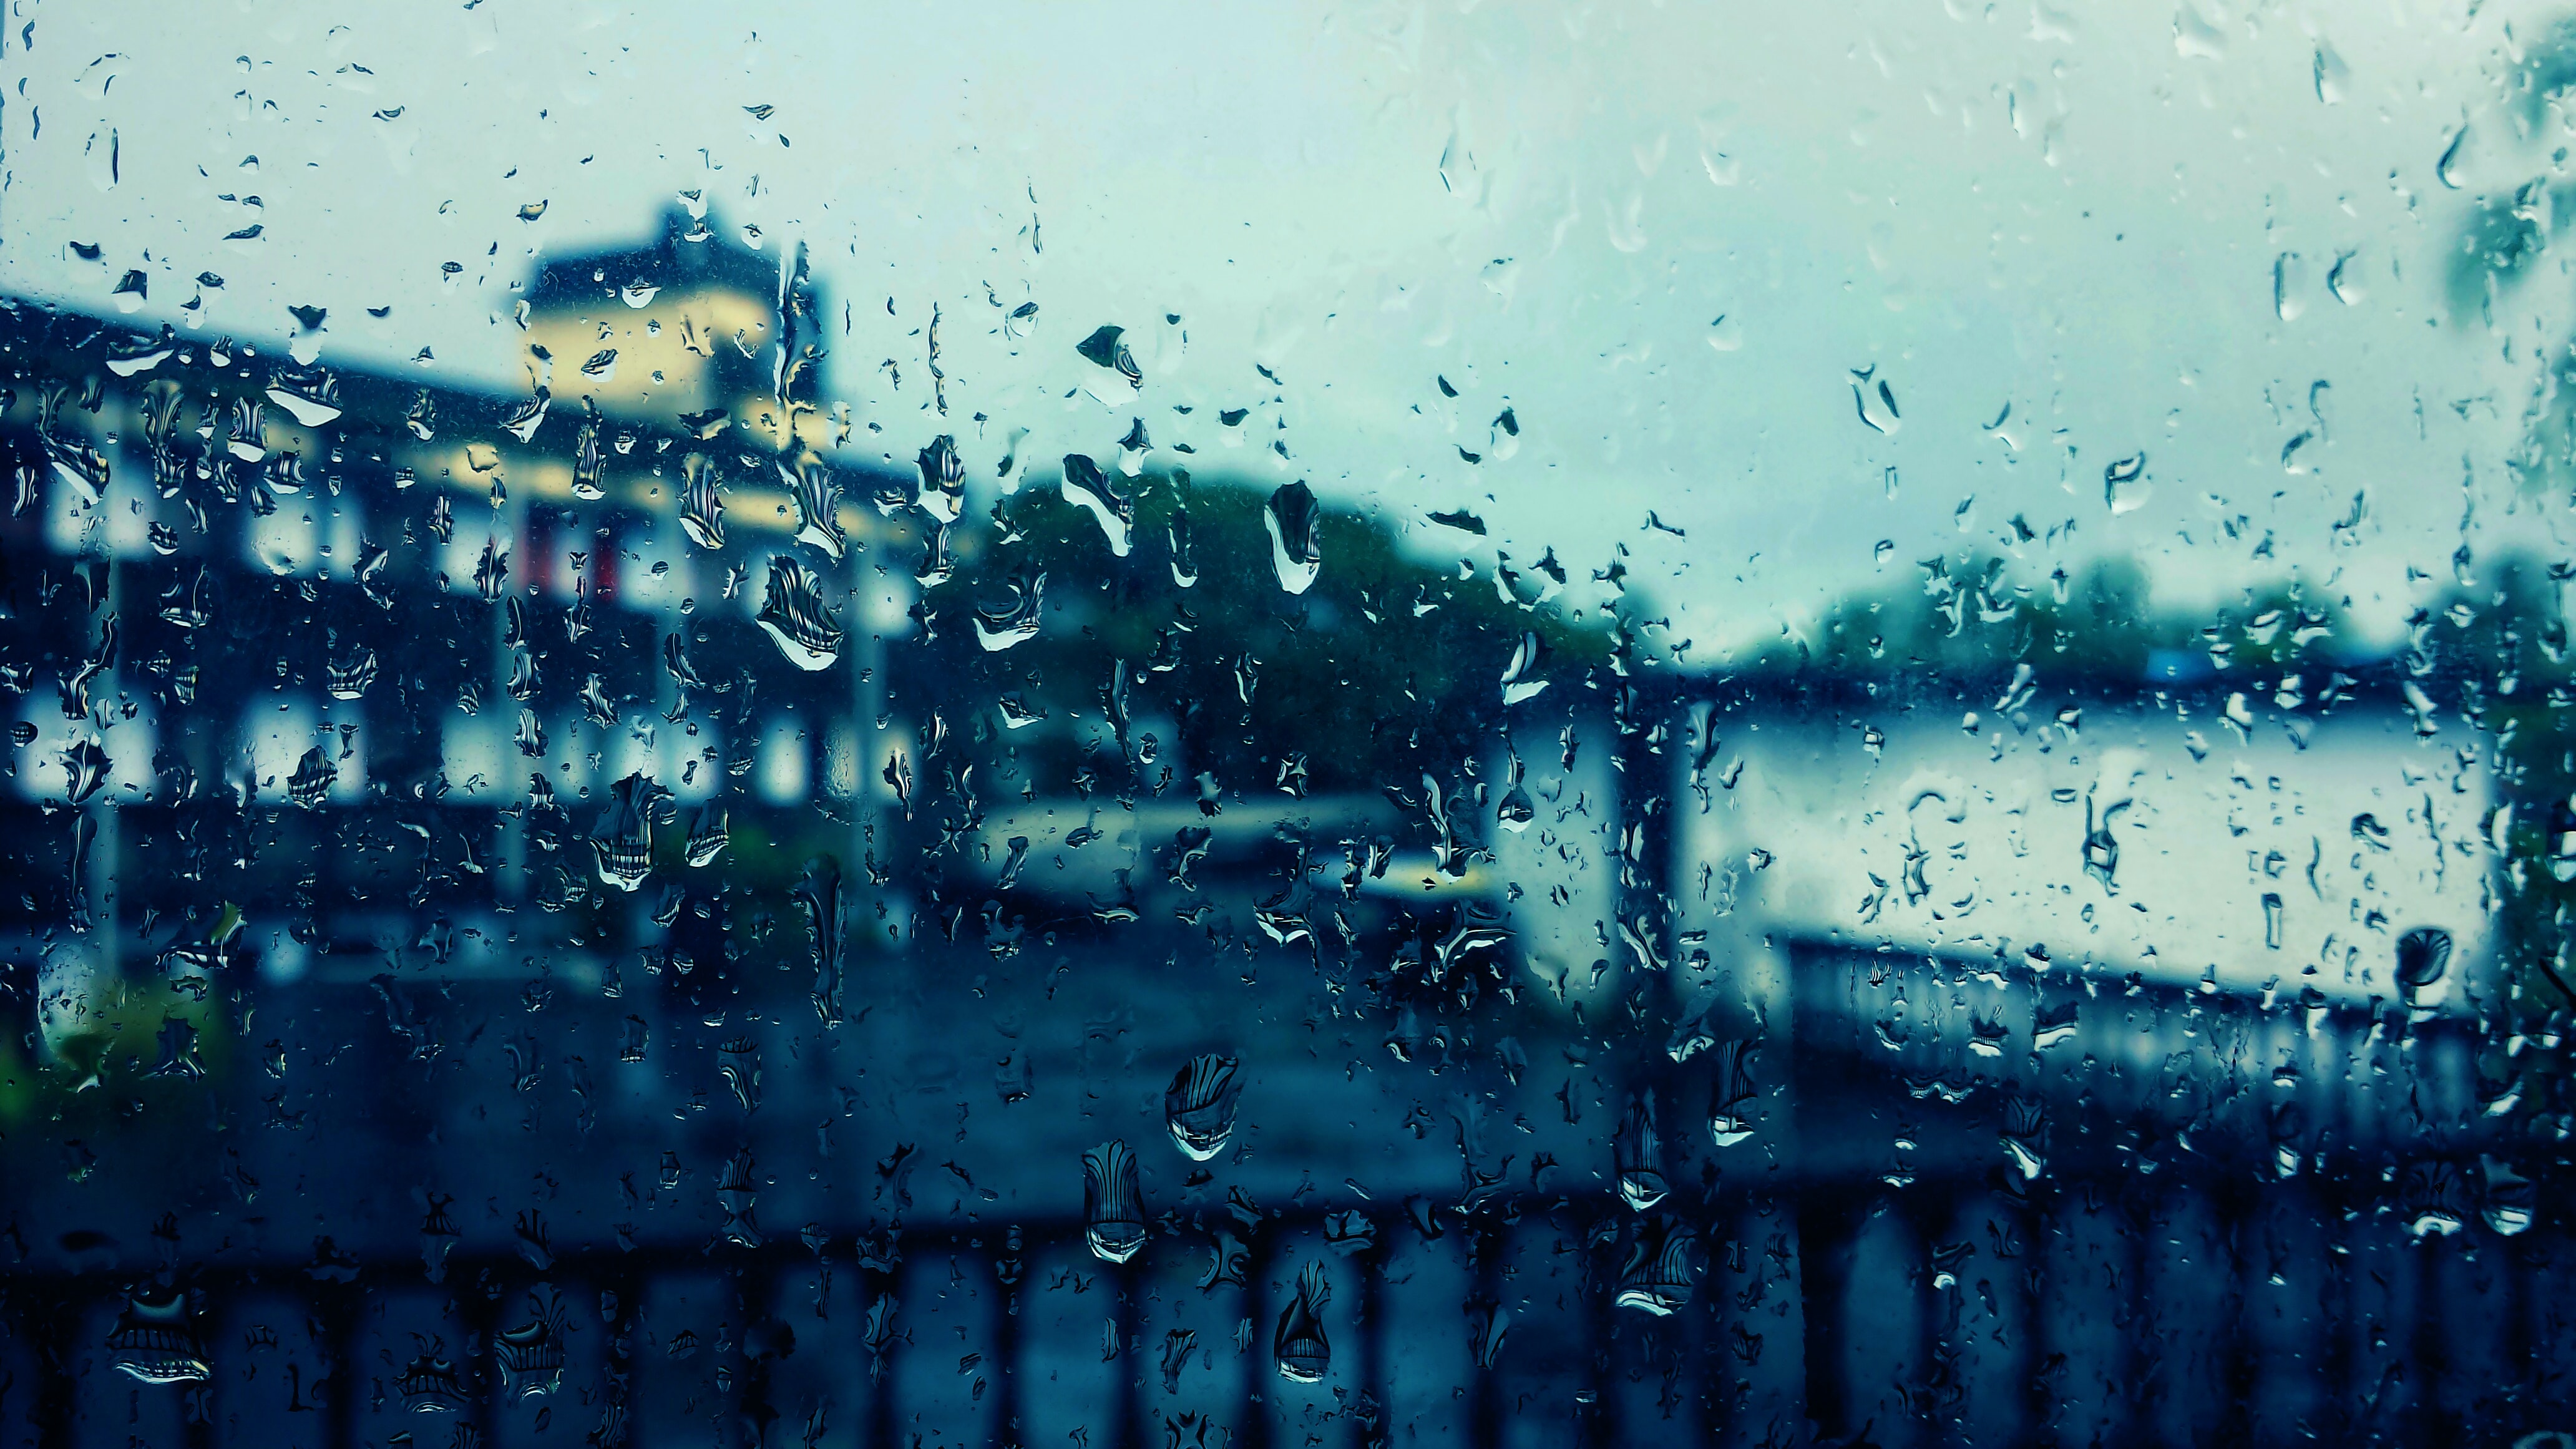 Best Rain On Window Photo · 100% Free Downloads